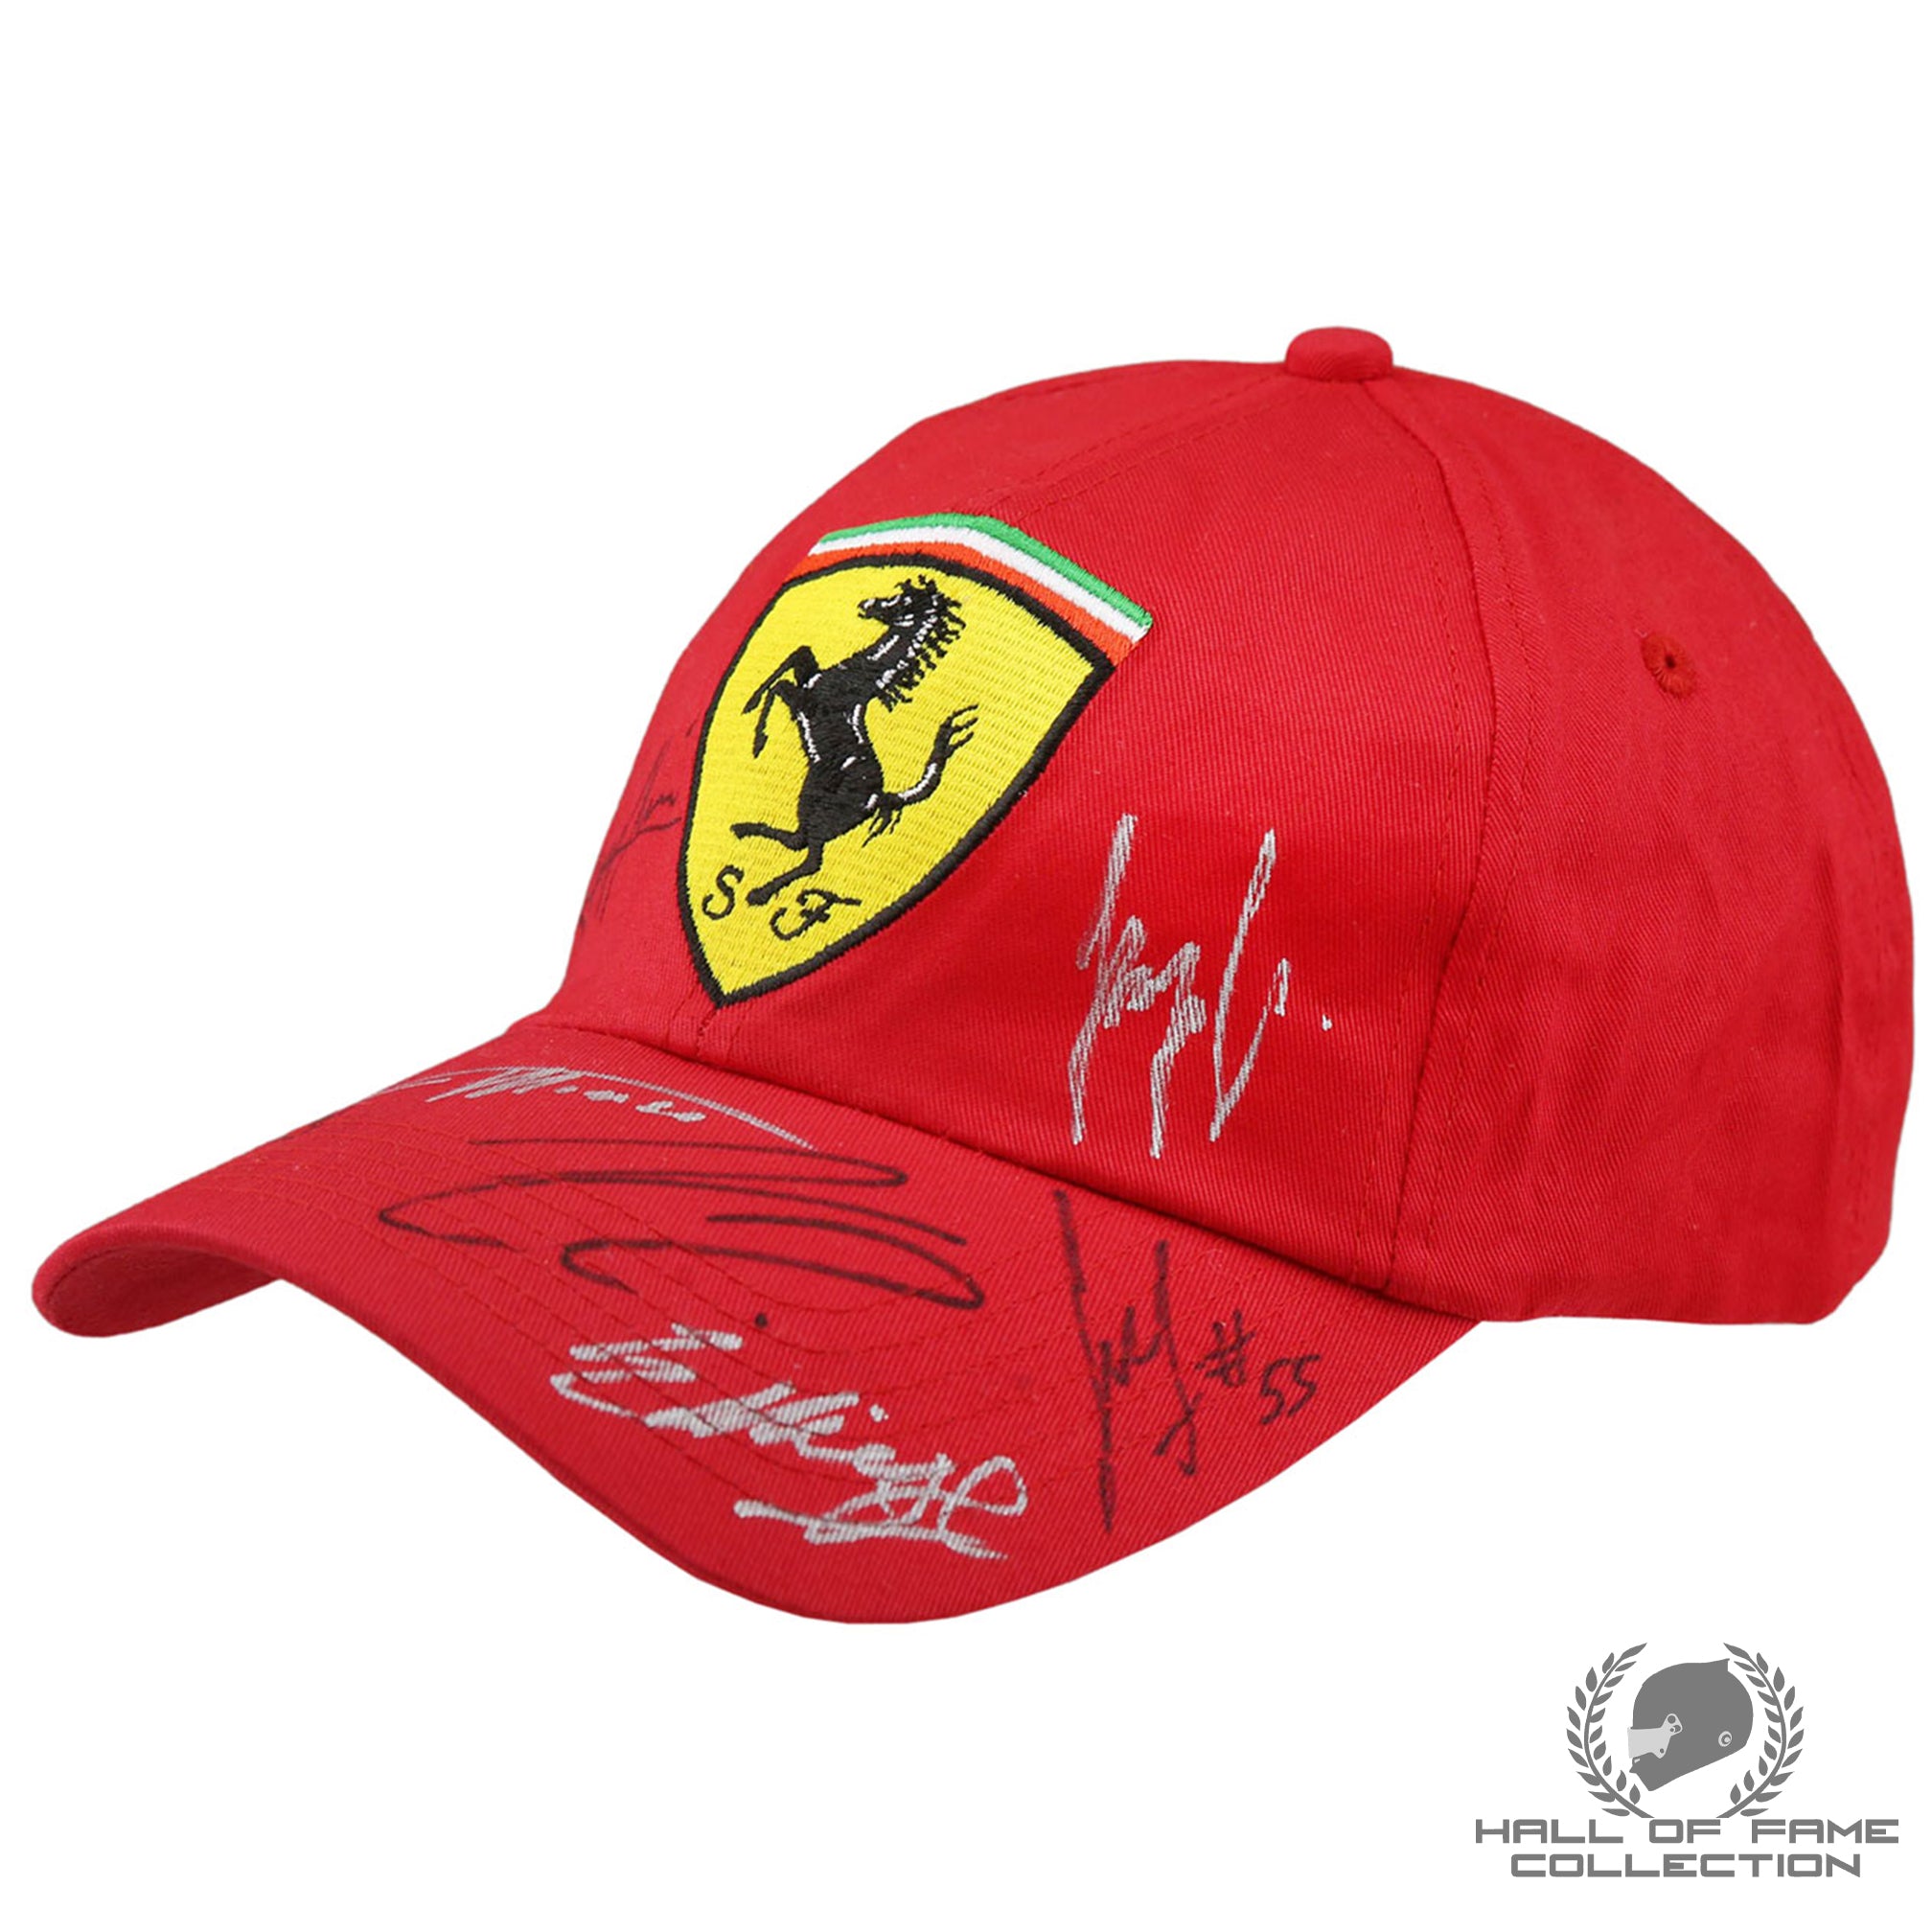 Alesi / Berger / Irvine / Alonso / Sainz / Raikkonen / Leclerc Signed Scuderia Ferrari F1 Hat